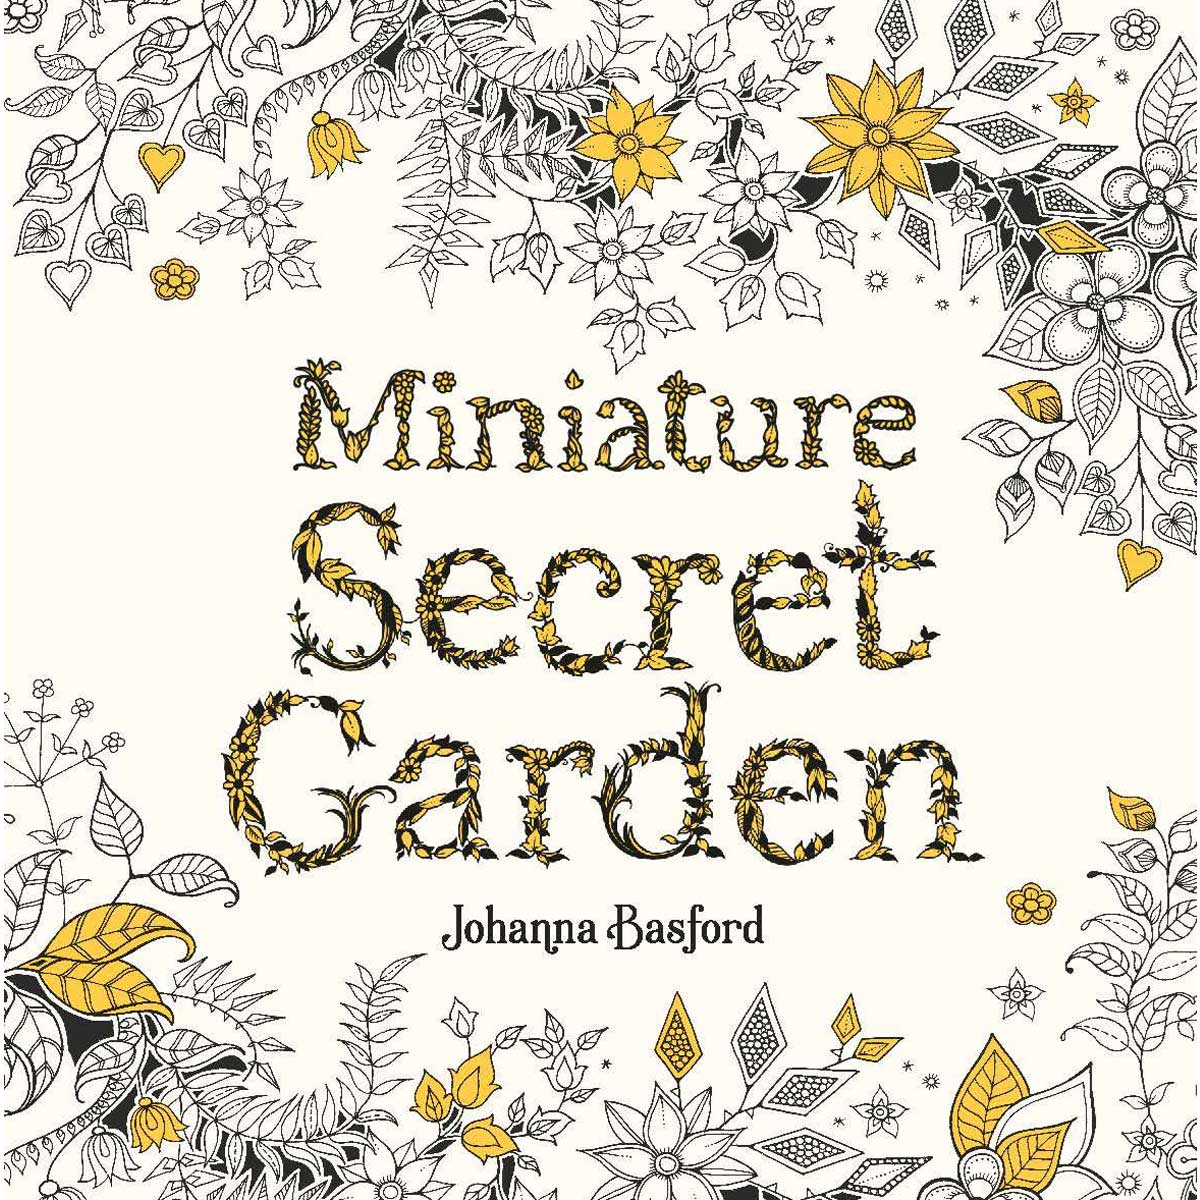 Miniature Secret Garden Colouring Book by Johanna Basford